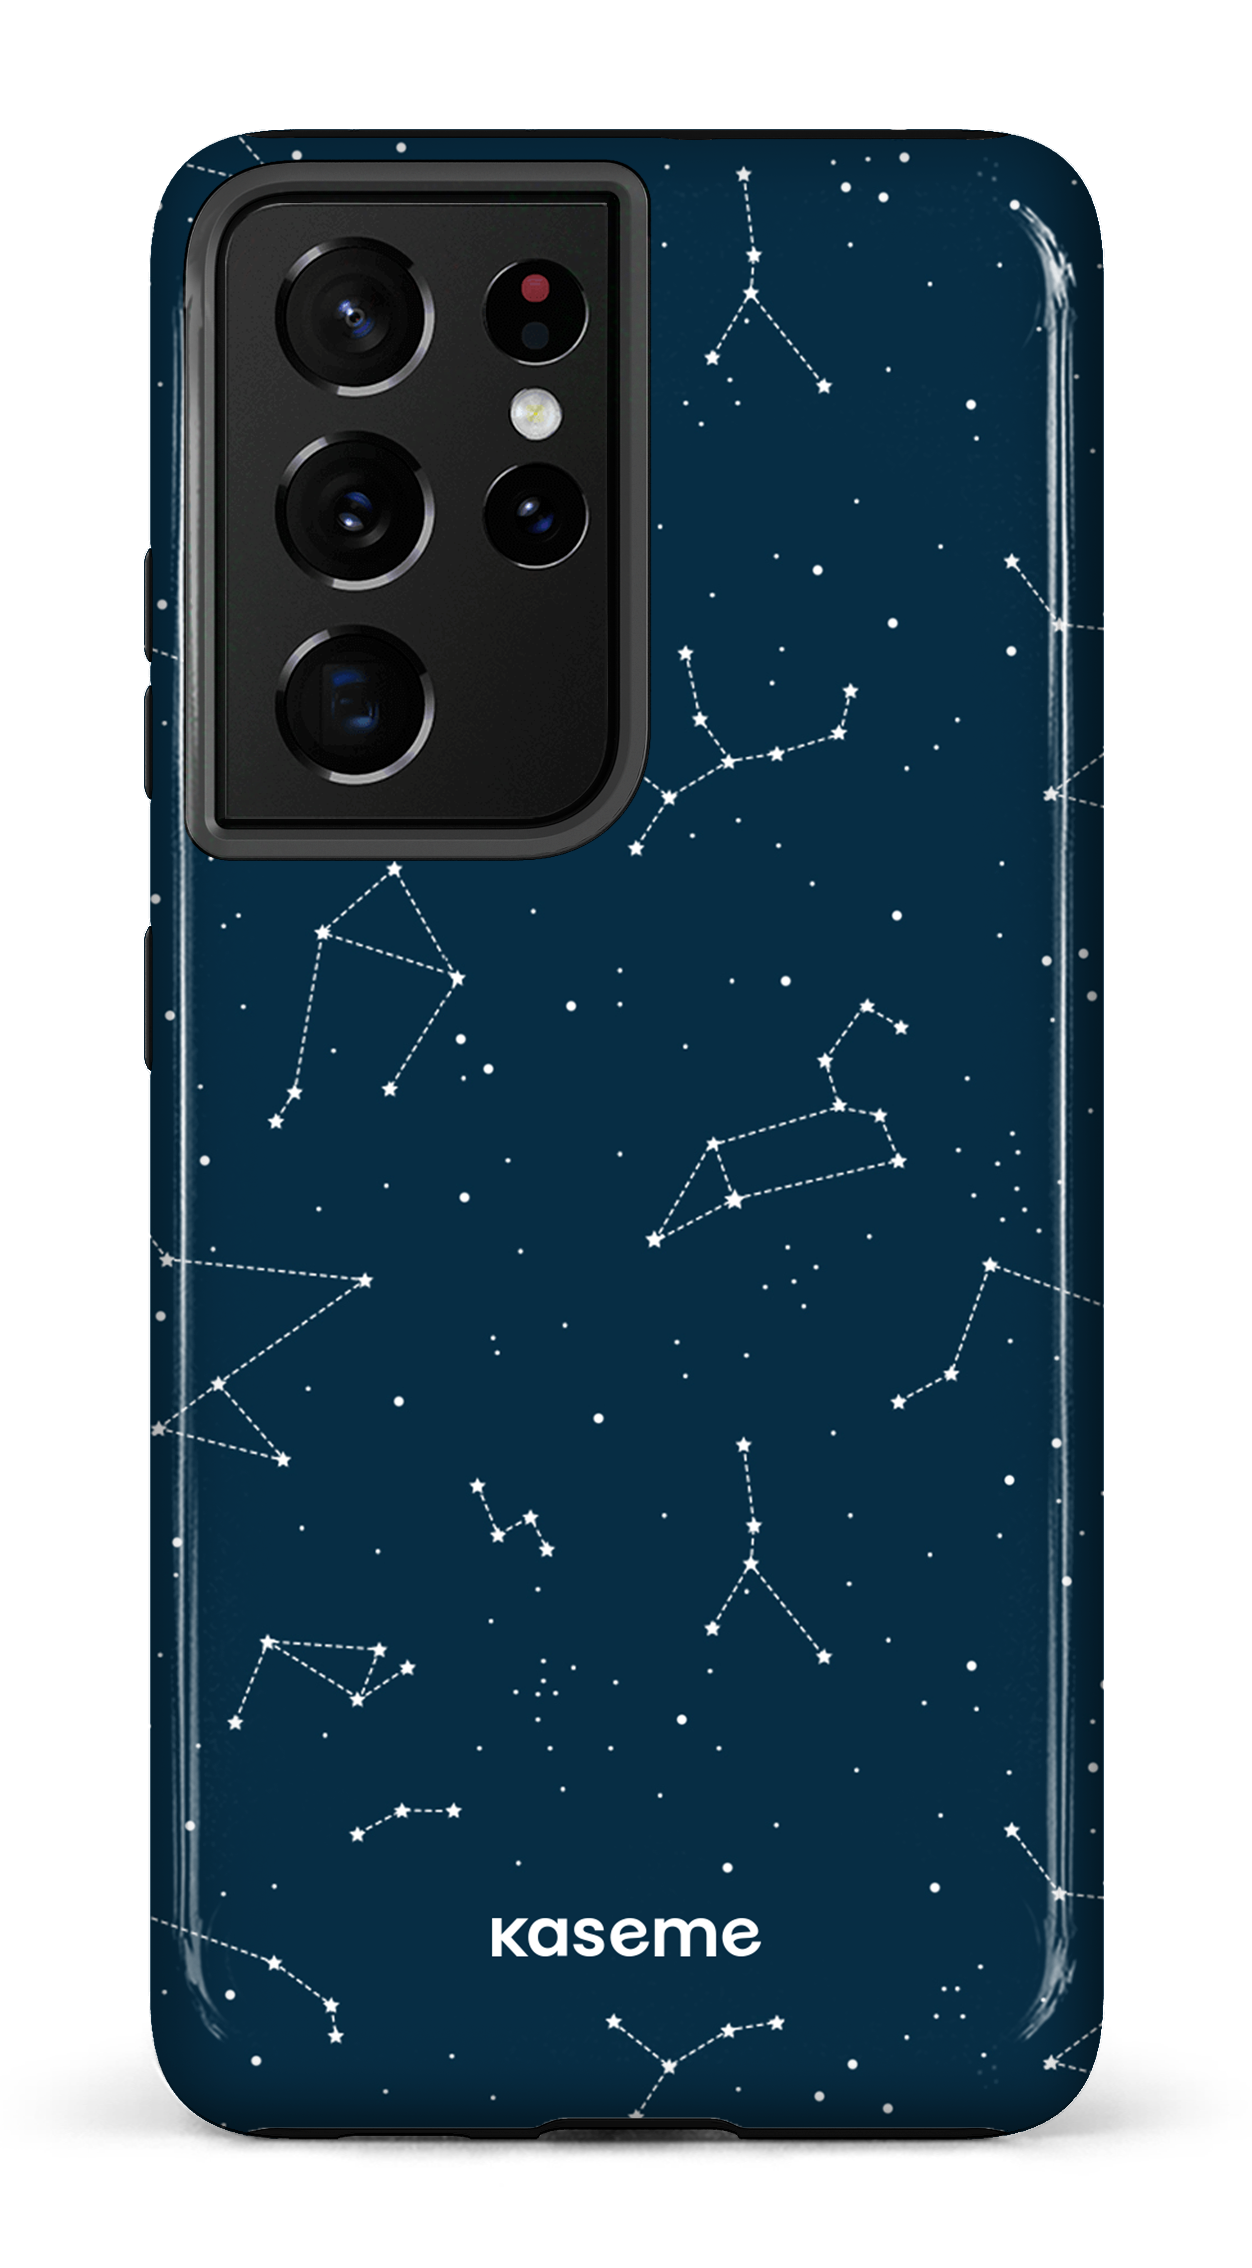 Cosmos - Galaxy S21 Ultra